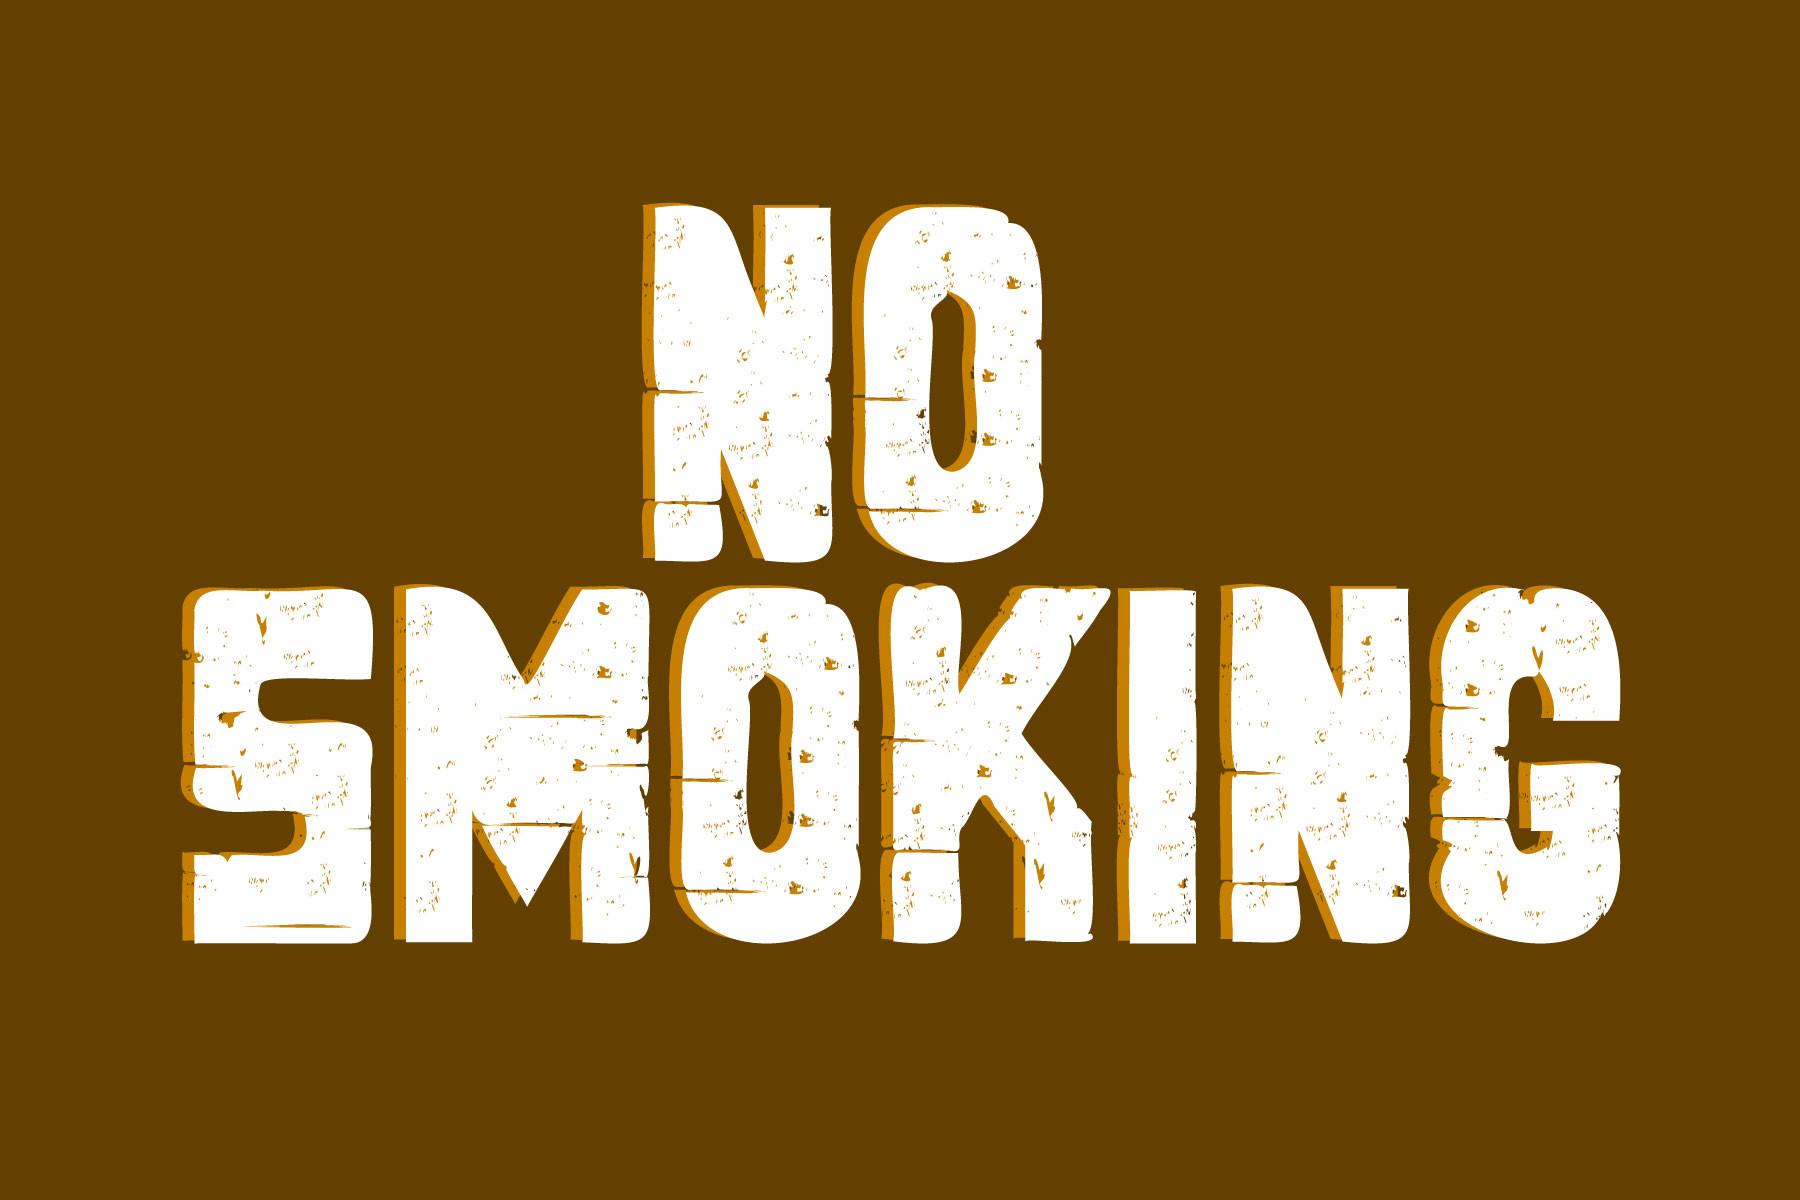 No Smoking Font